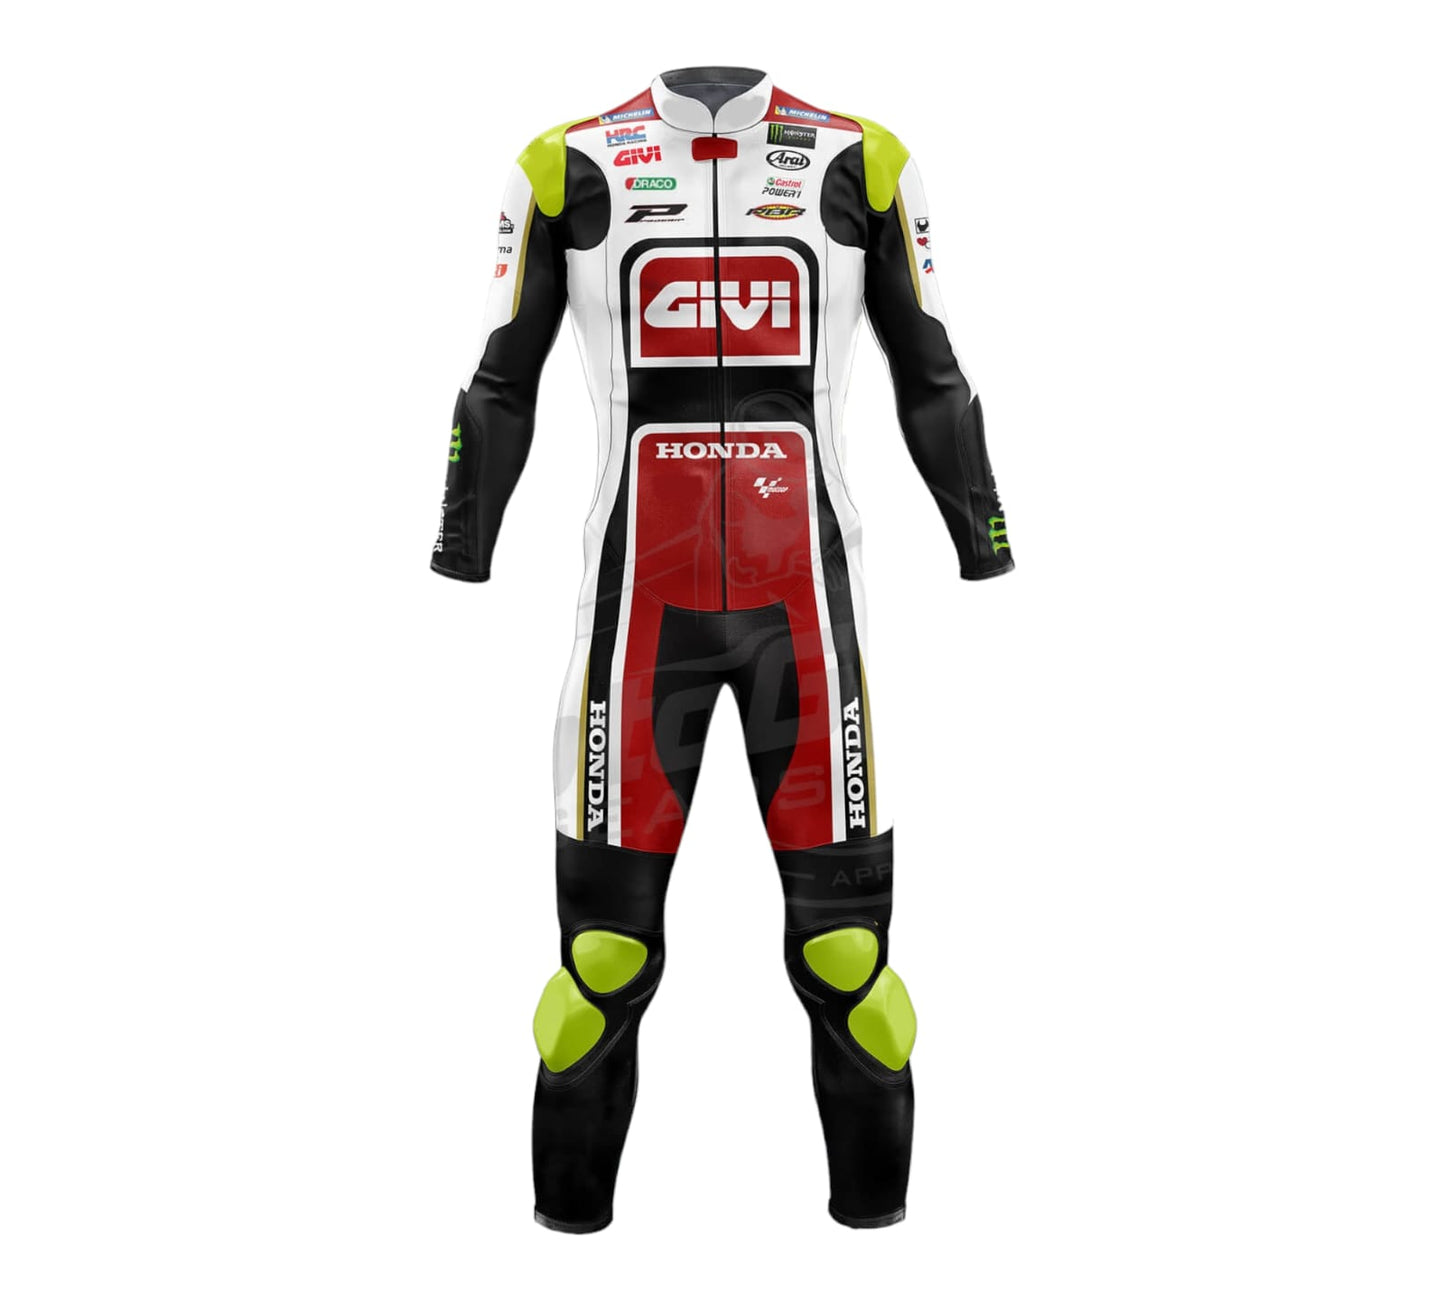 Honda Givi Cal Crutchlow 2017 Racing Suit